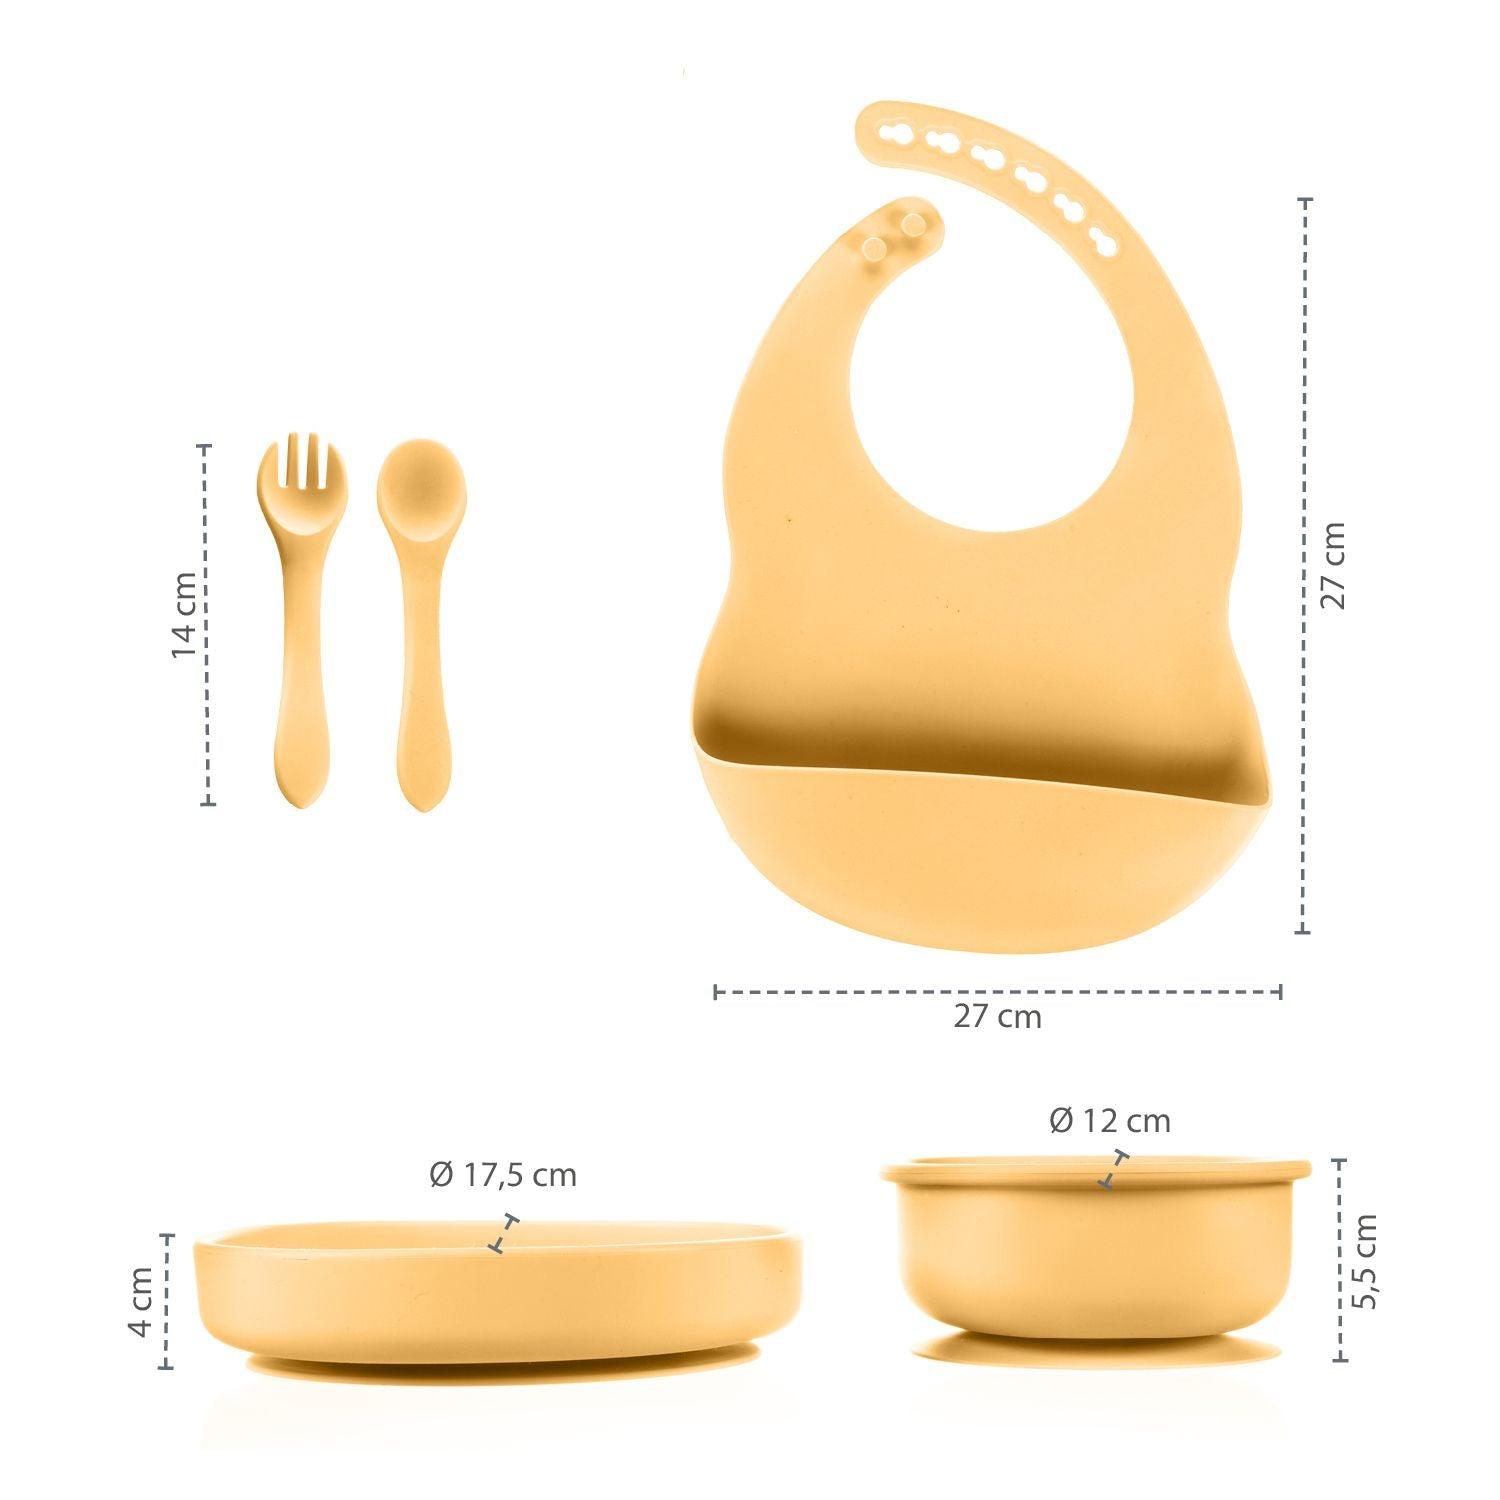 5-Piece Silicone Baby Feeding Set - Bowl, Plate, Spoon, Fork & Bib - Mari Kali Stores Cyprus